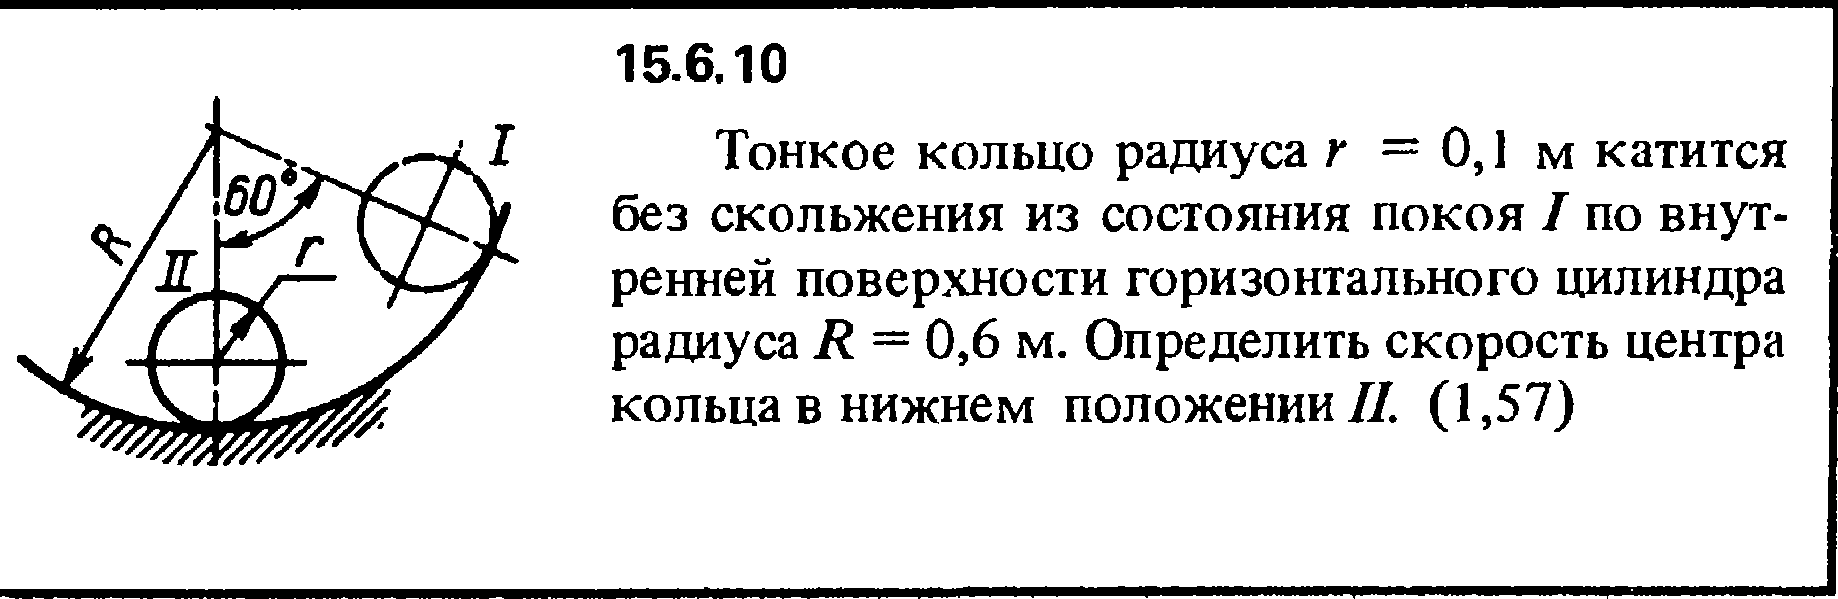 Решение задачи 15.6.10 из сборника Кепе О.Е. 1989 года